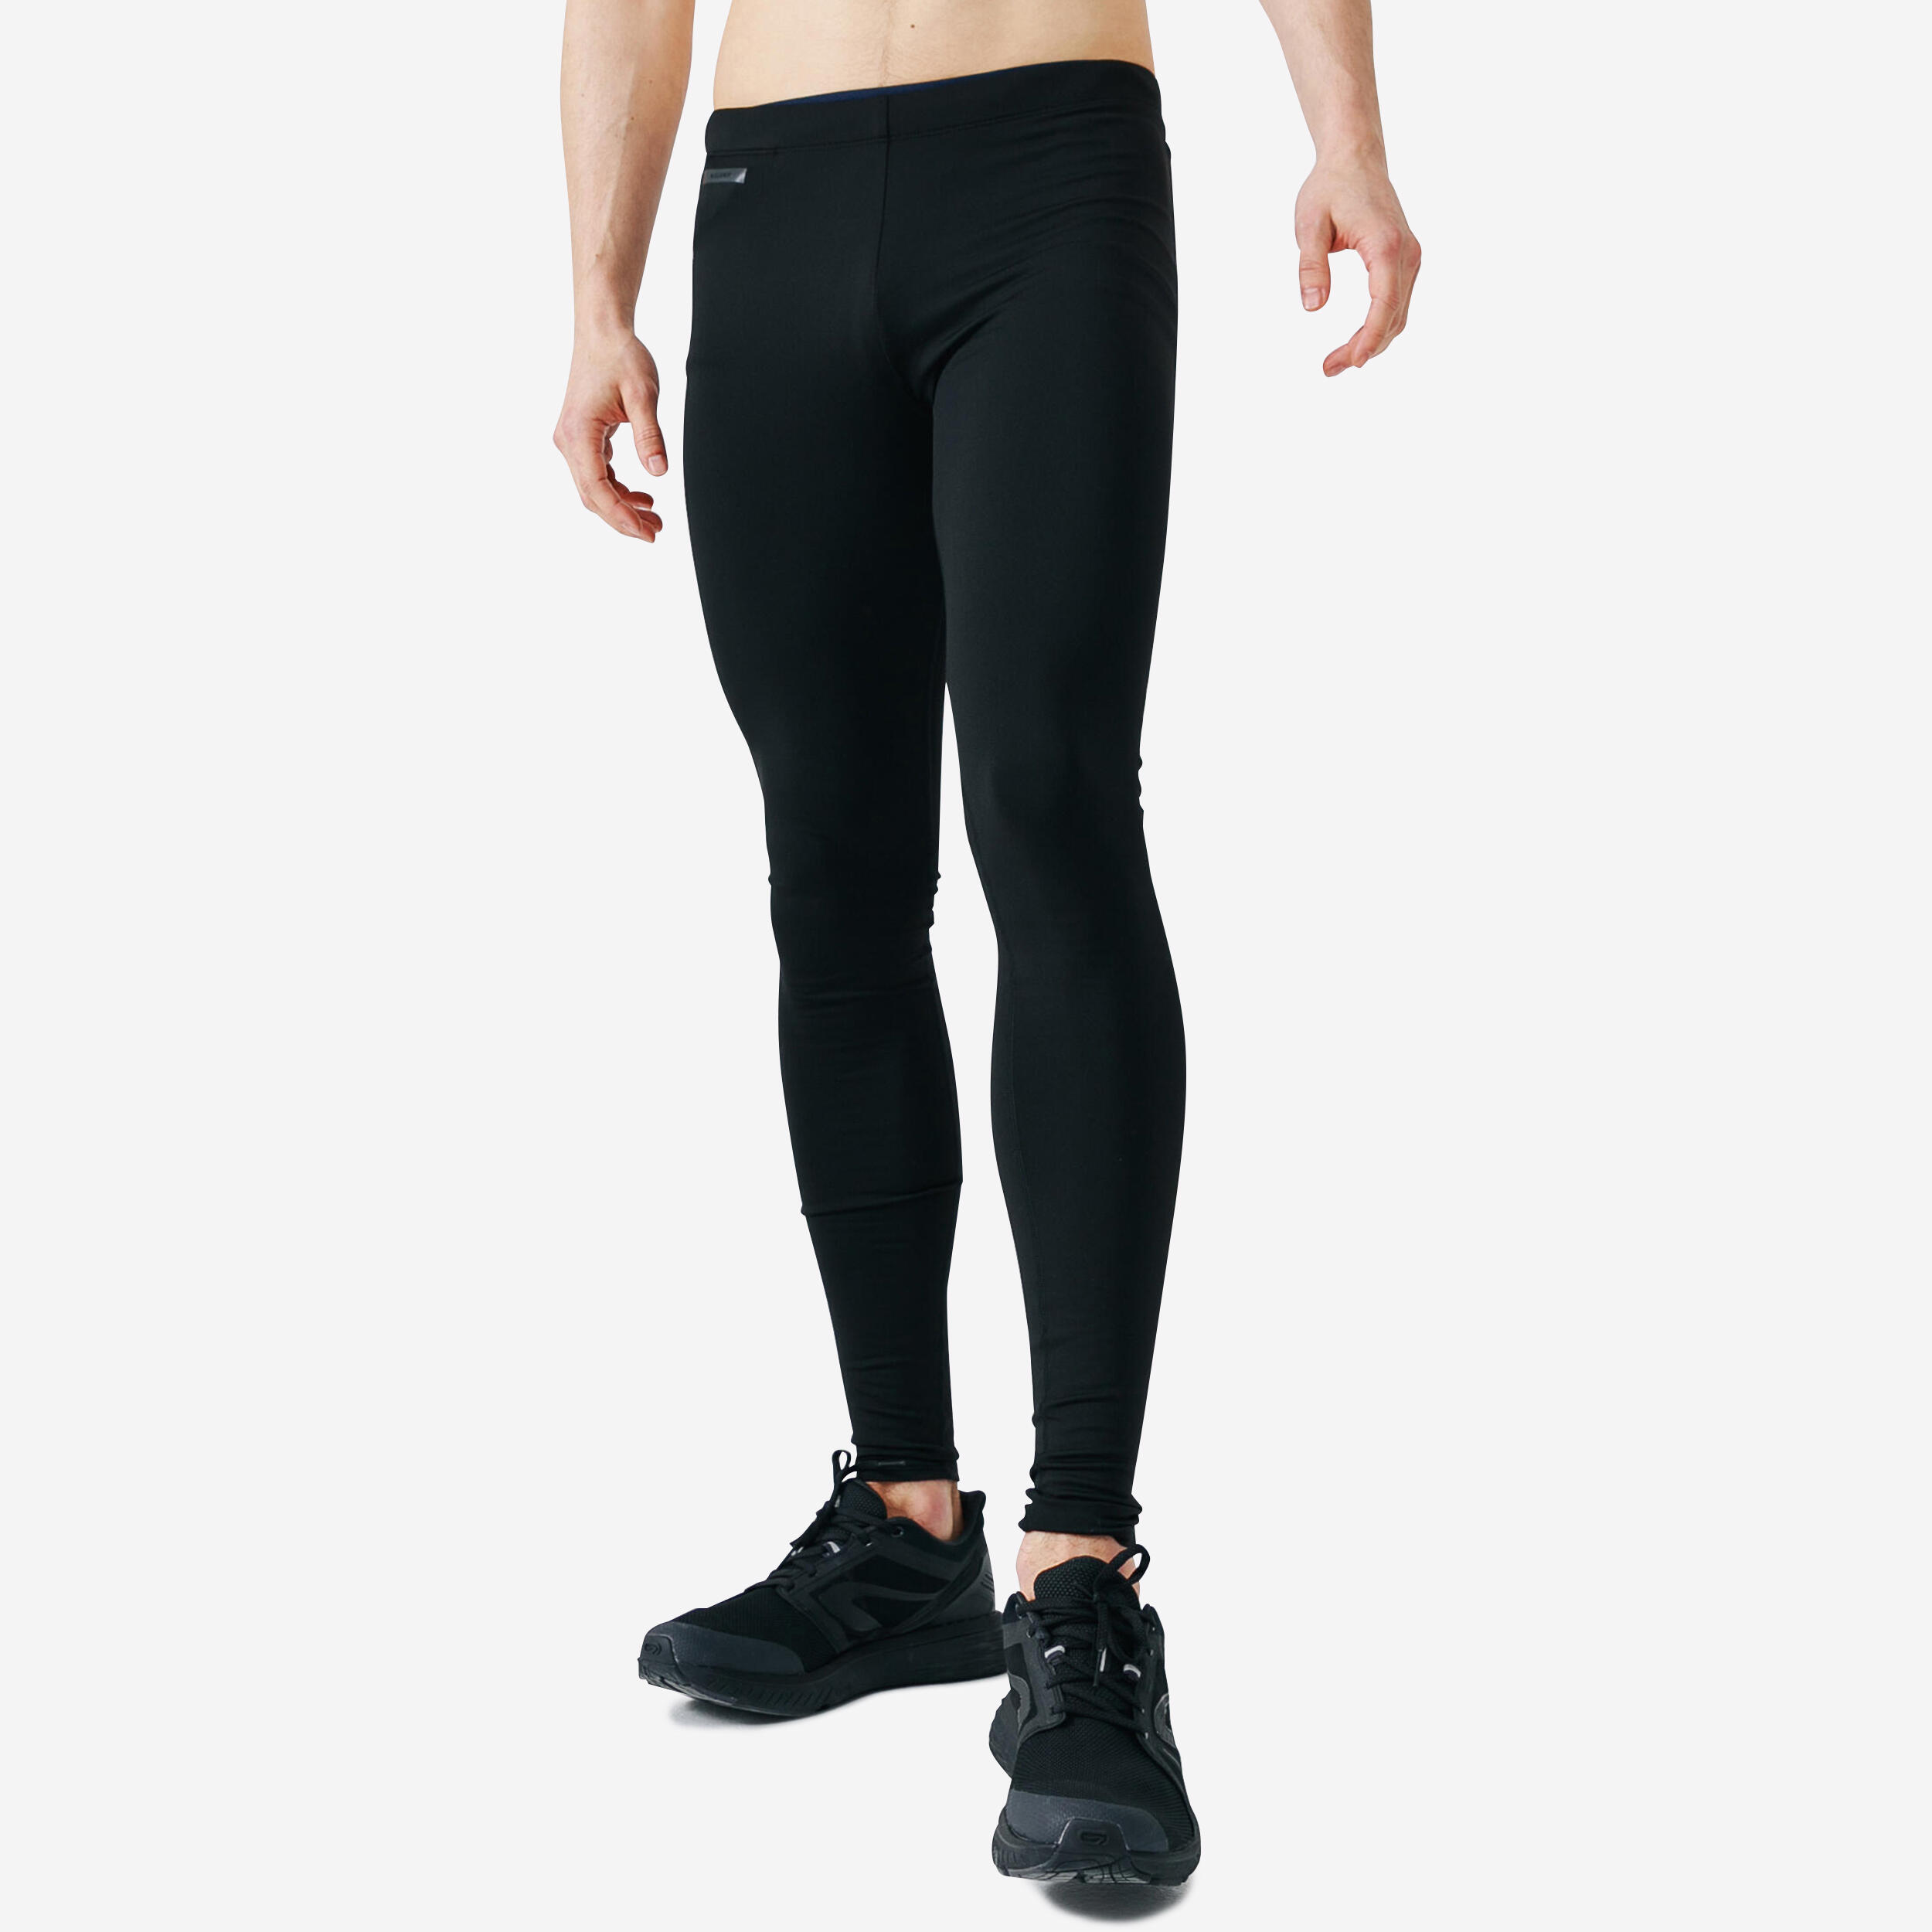 Buy New Balance Mens Heat Thermal Running Tight Leggings Black